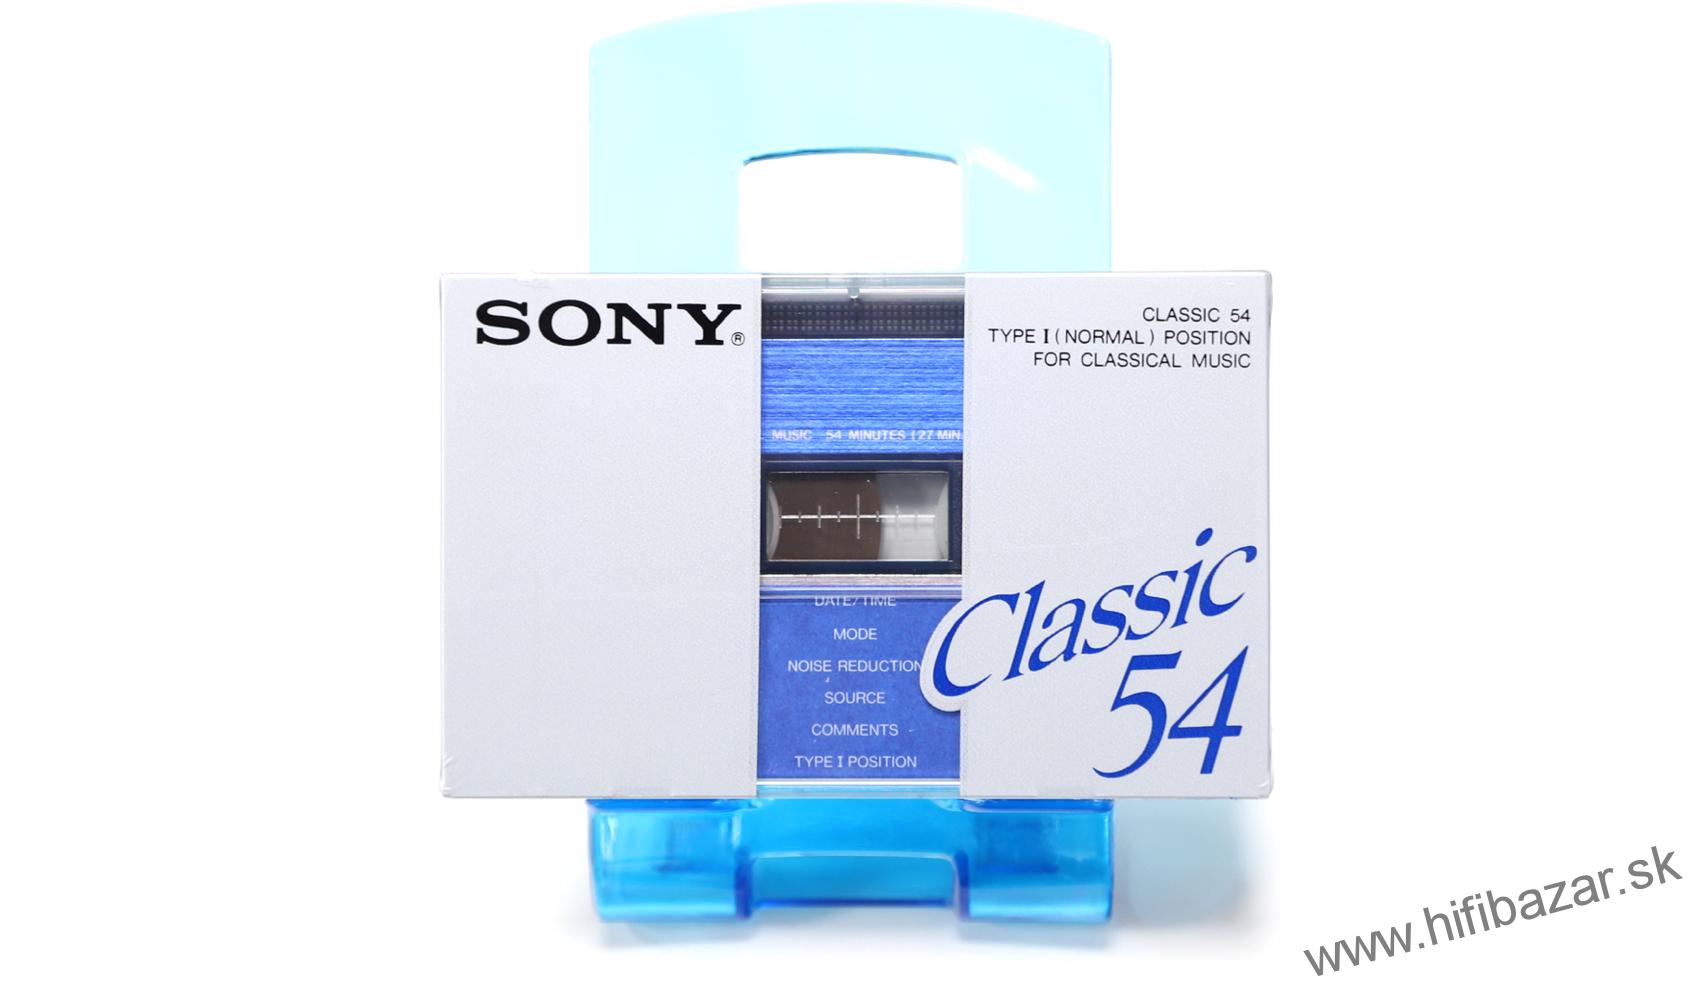 SONY CLASSIC-54 Japan